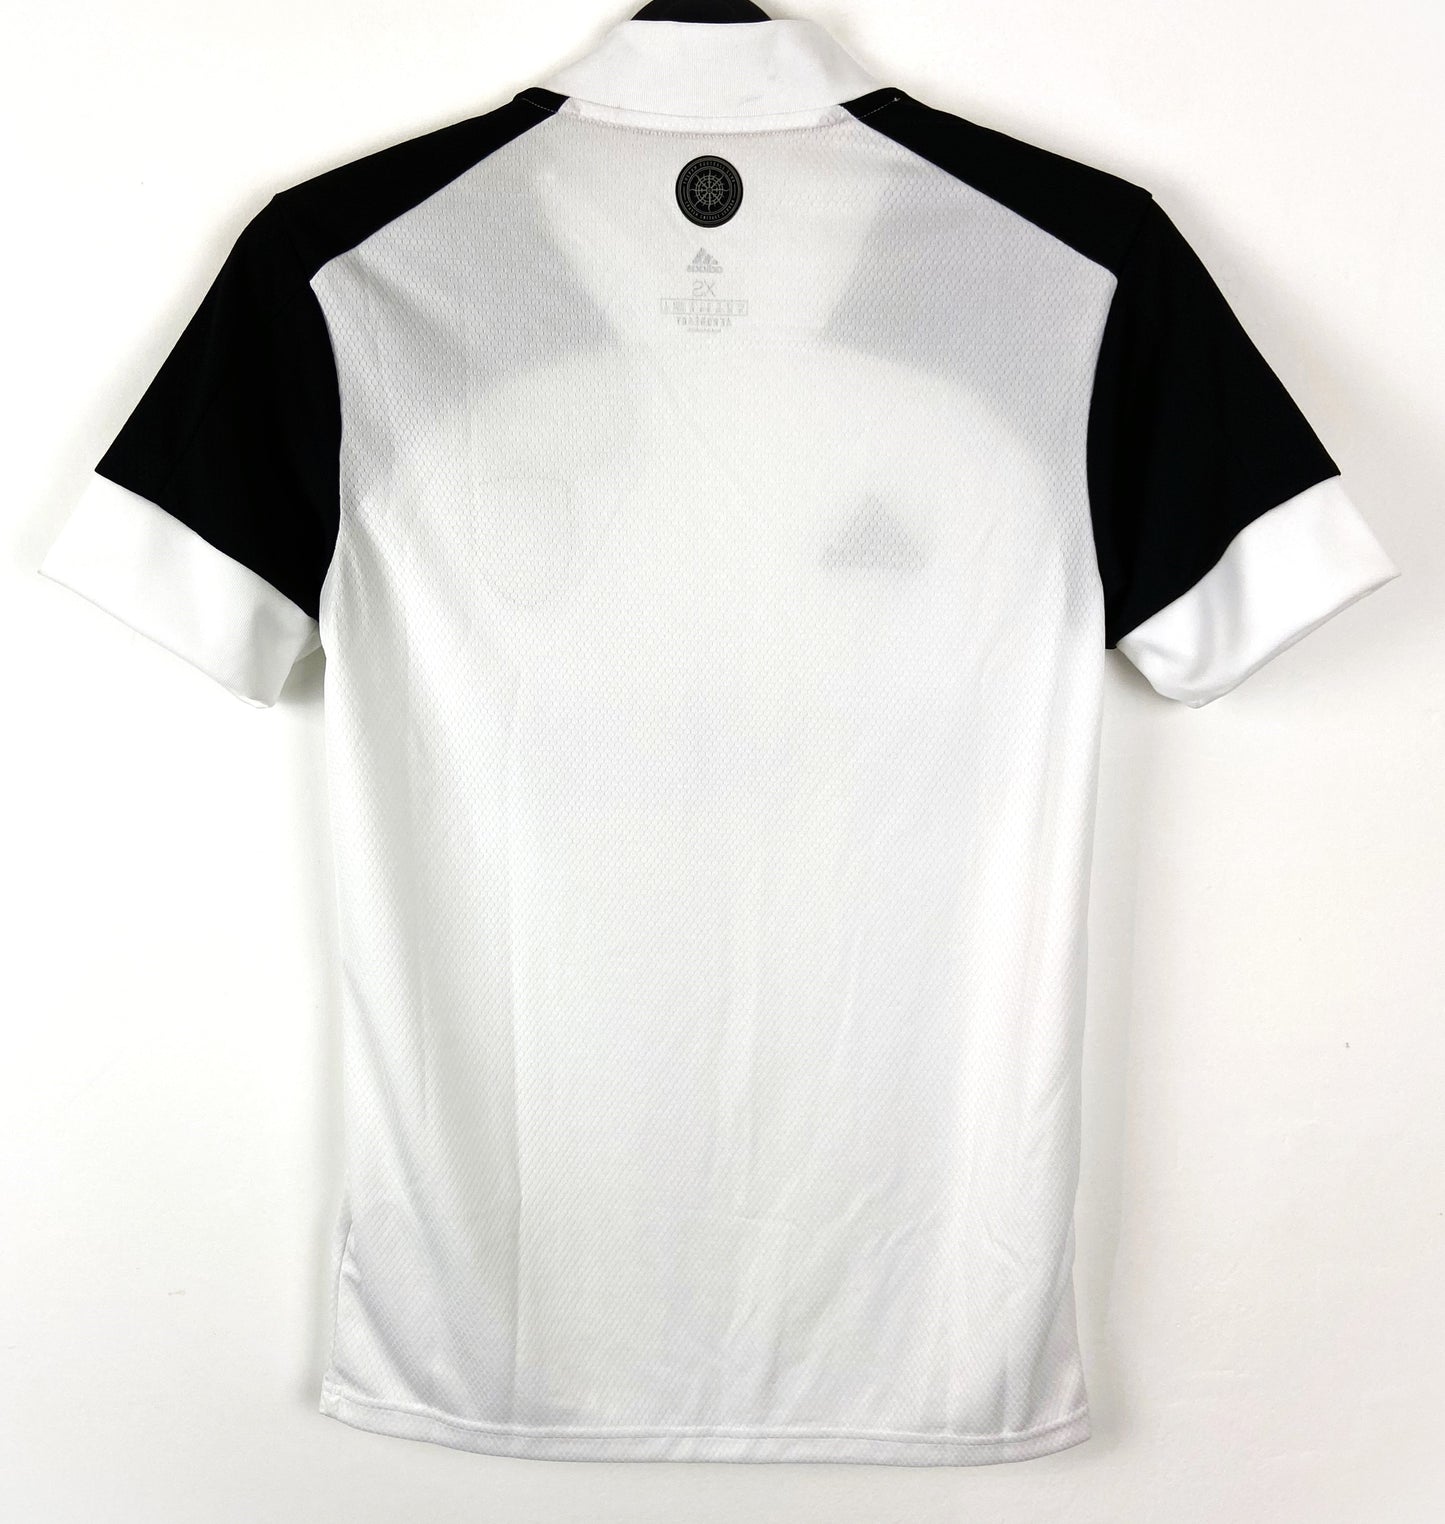 BNWT 2020 2021 Fulham Adidas Home Football Shirt Men's XS